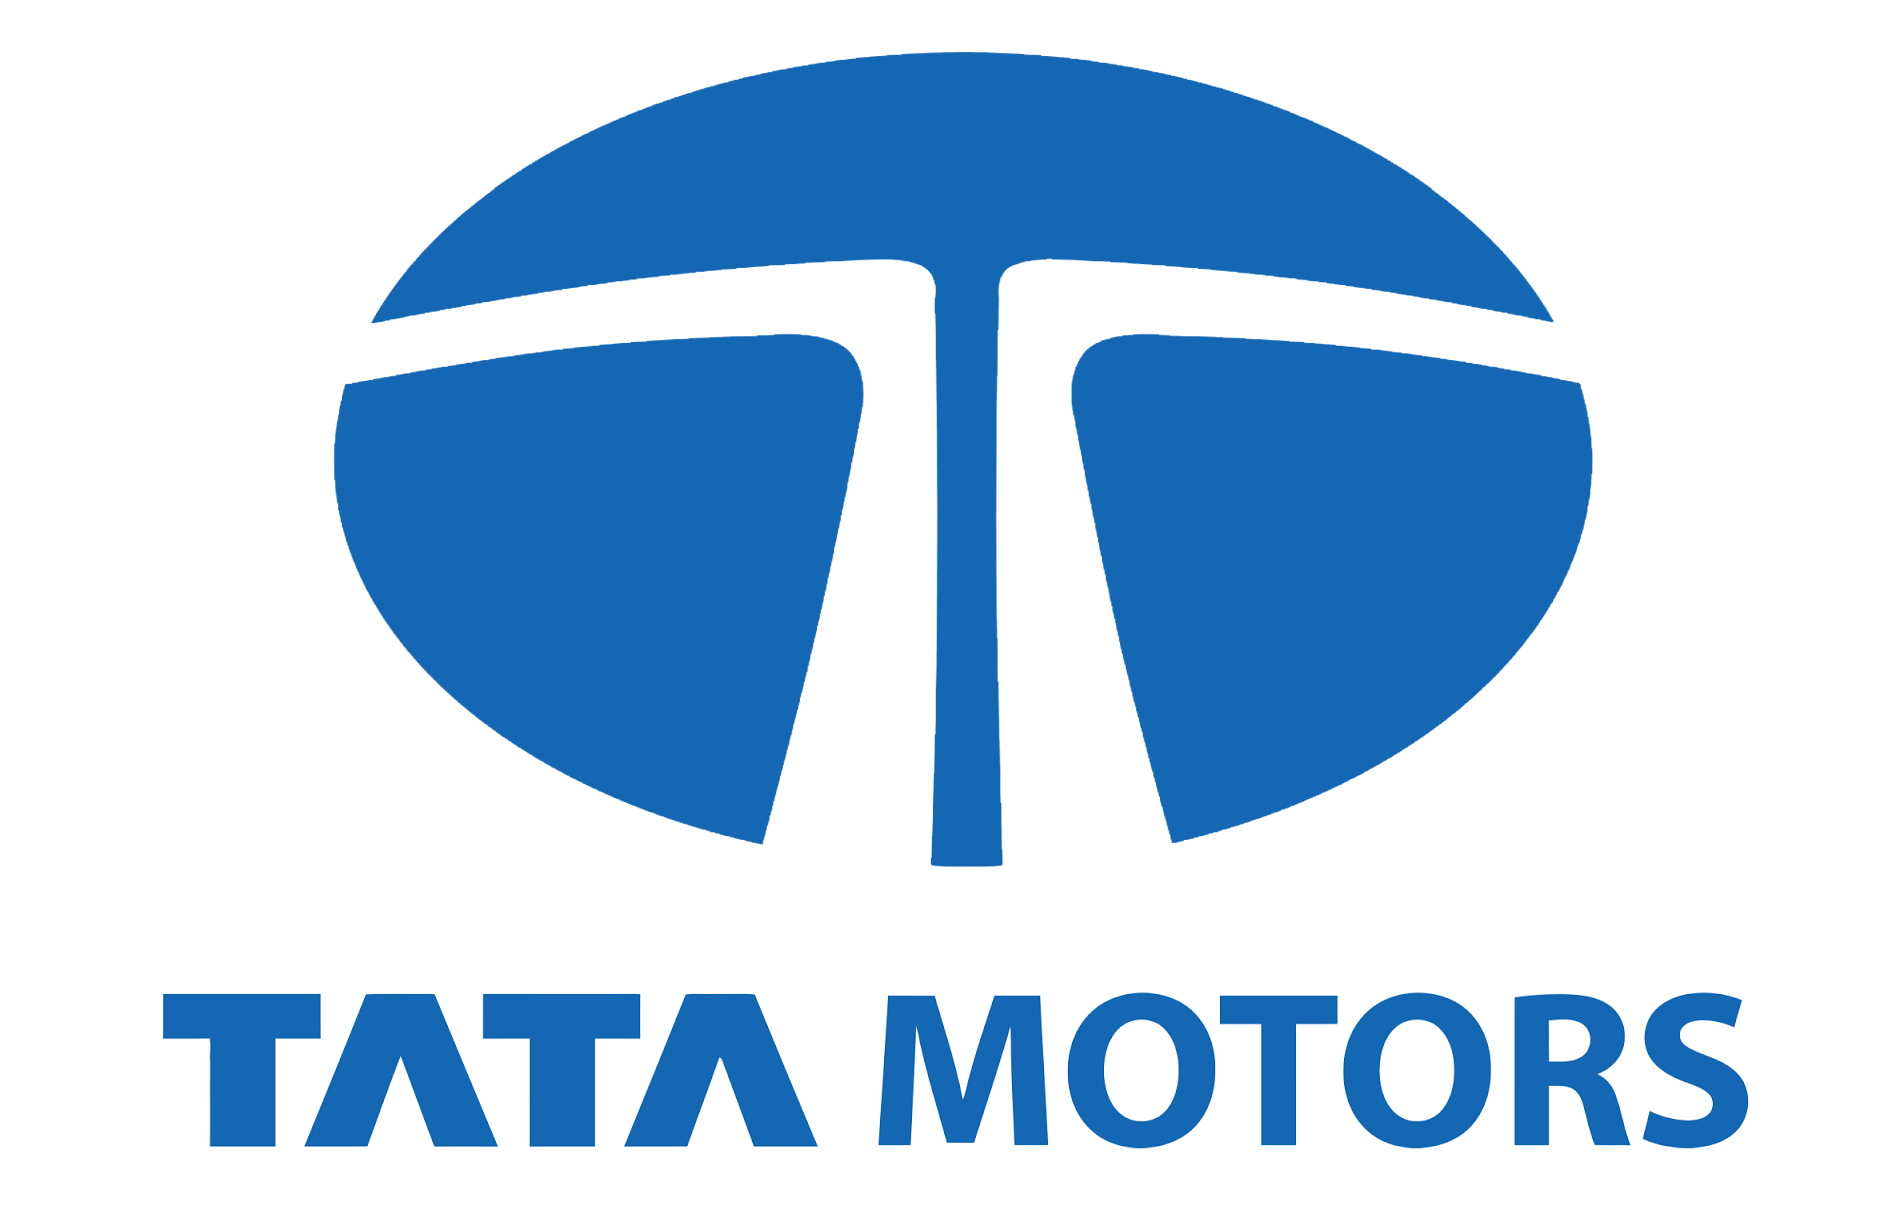 Tata Motors Cars Showroom - Haroon Cars|Show Room|Automotive